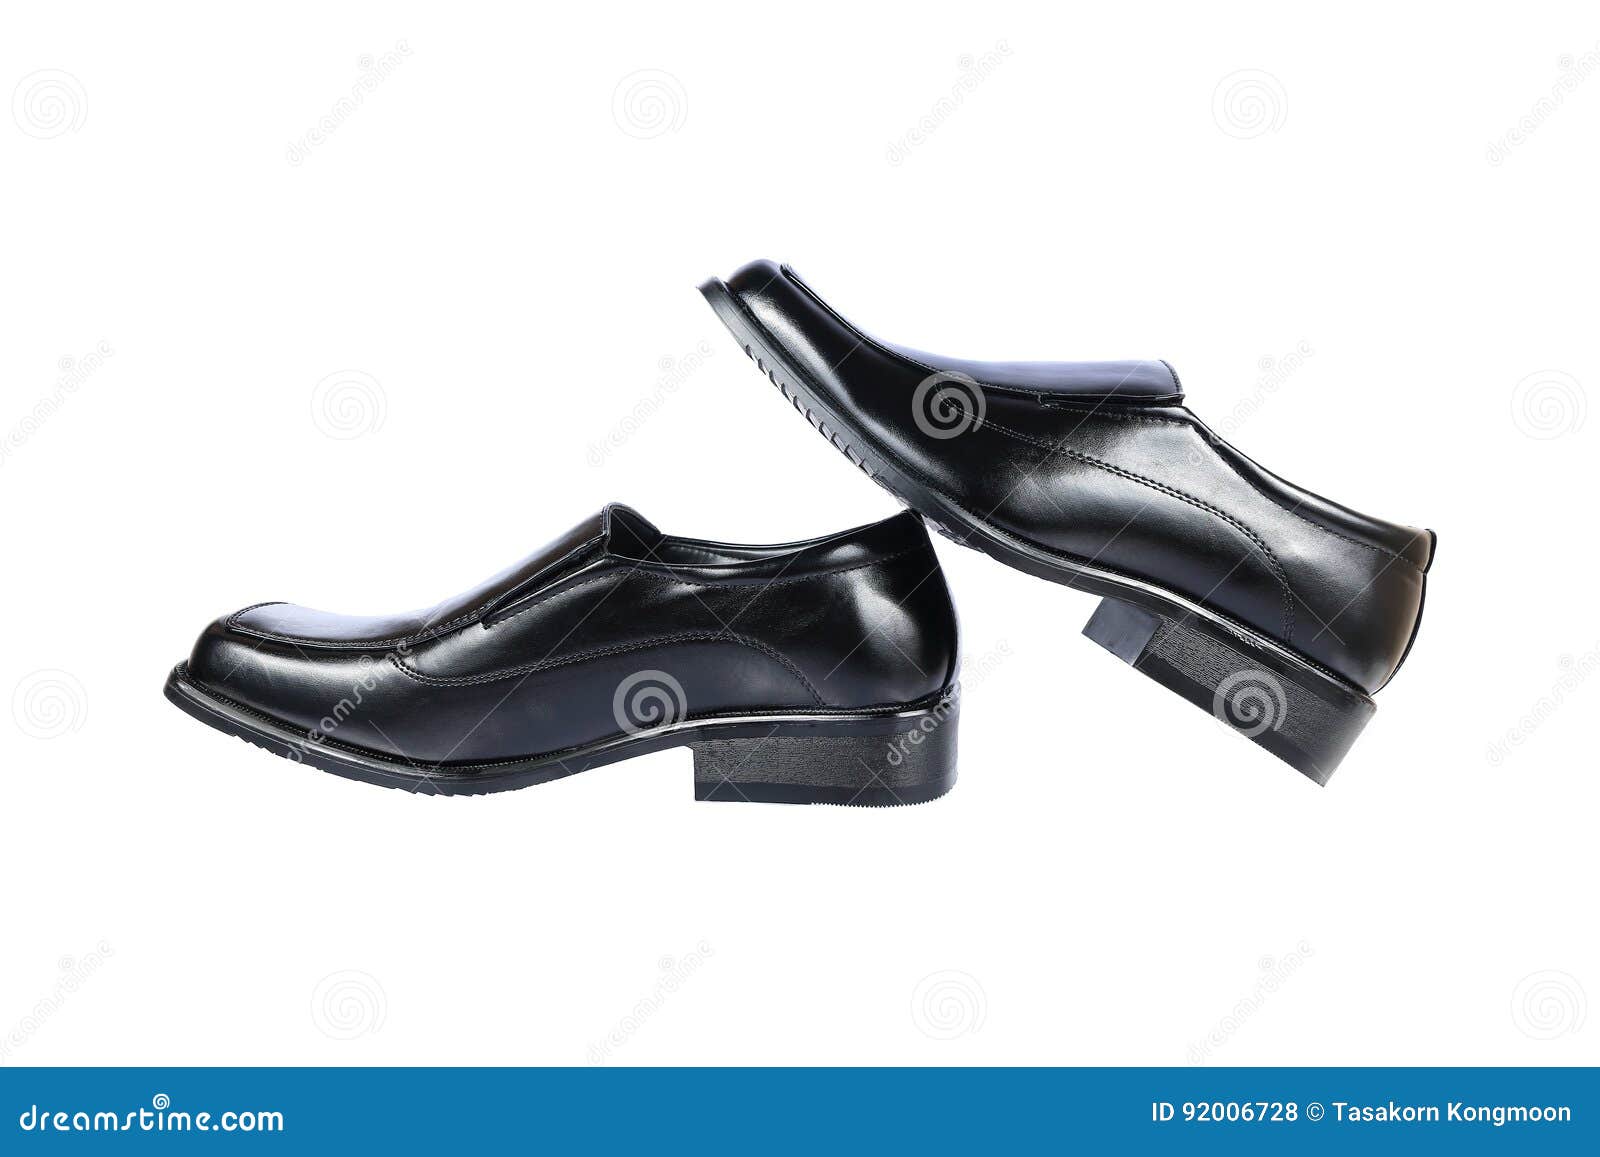 Black Leather Shoes Isolated on White Stock Photo - Image of luxurious ...